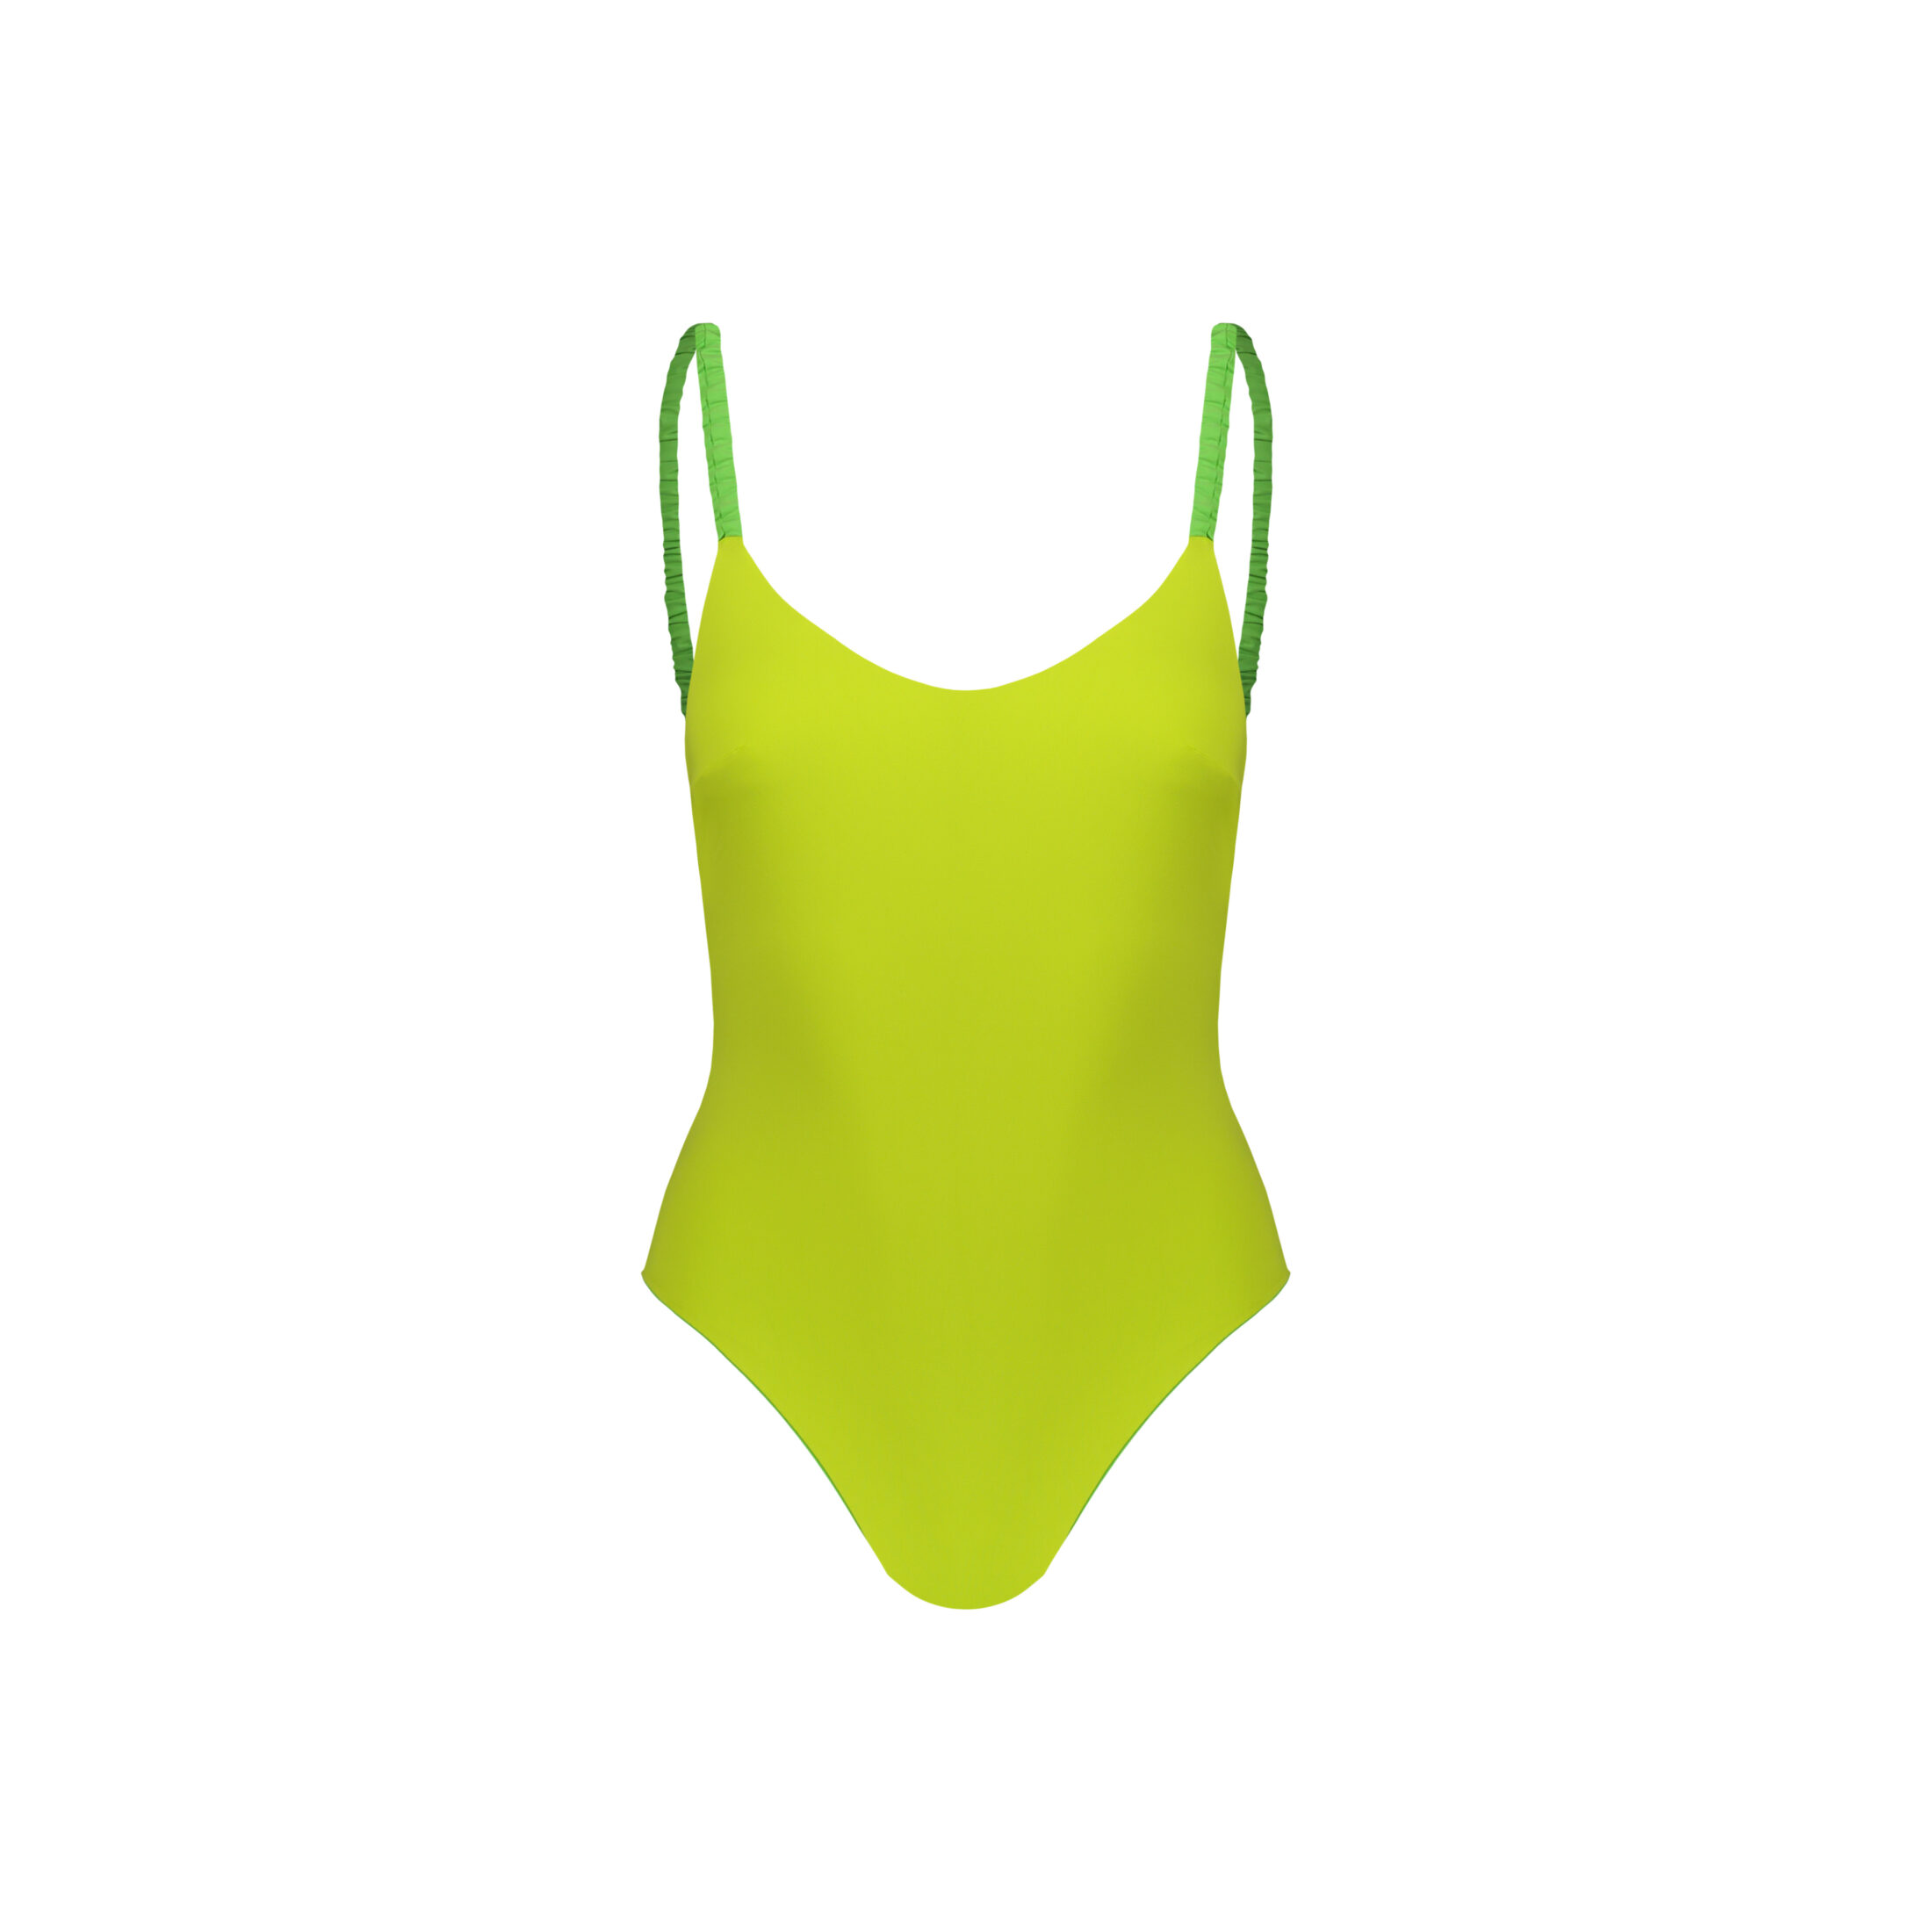 Perlas swimsuit green/lime